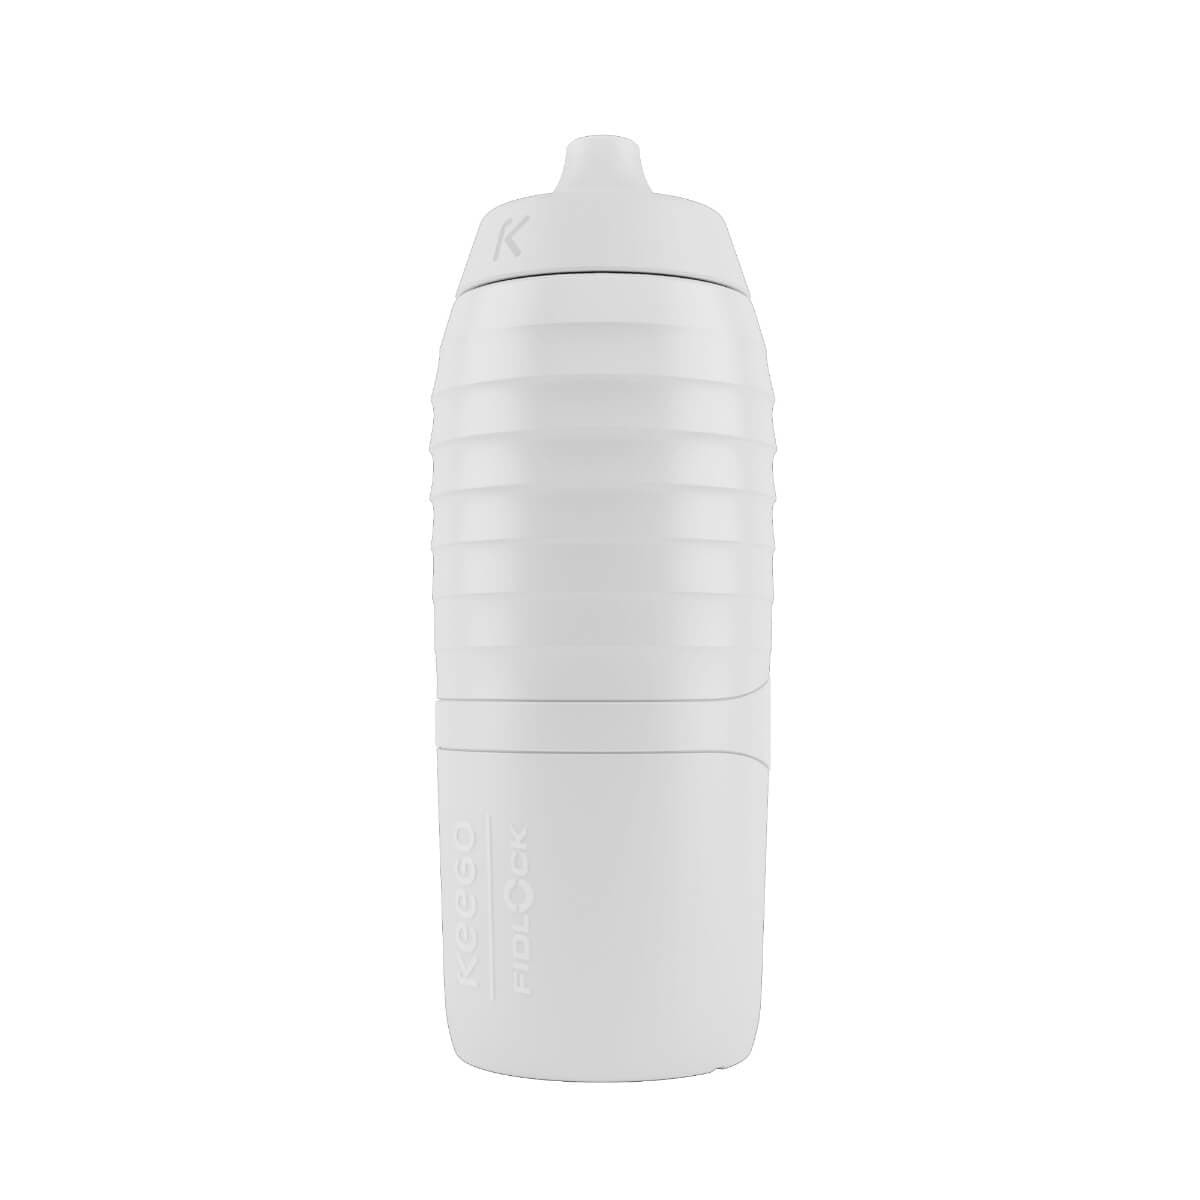 The white bike bottle TWIST x KEEGO 0.6L upright 